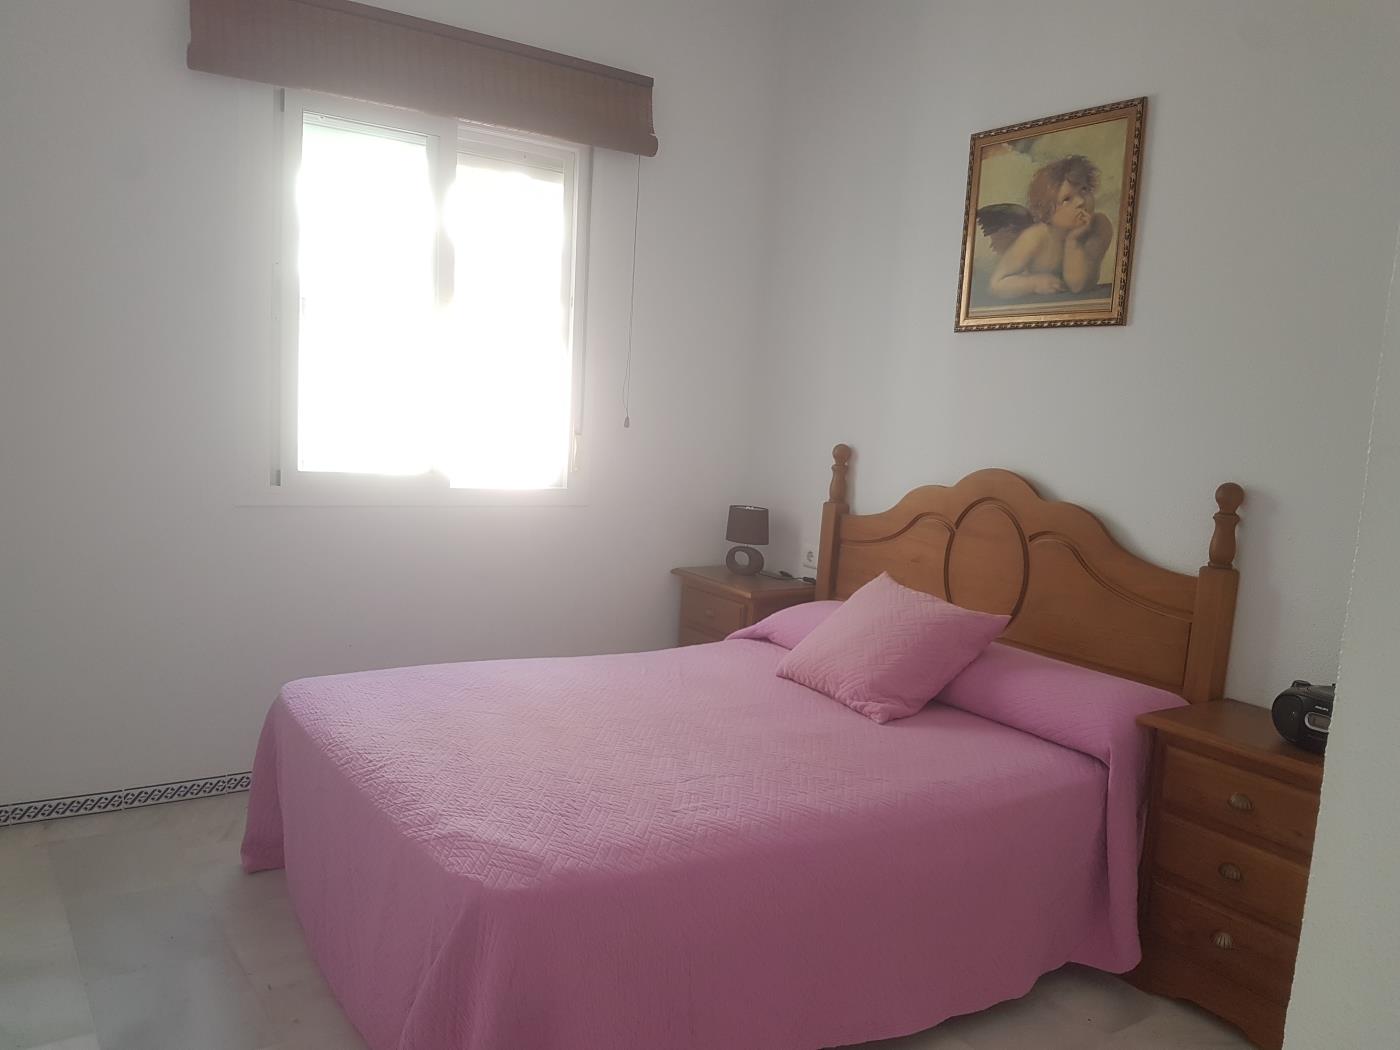 Ref V6. Two-bedroom apartment on the ground floor in Chiclana de la Frontera